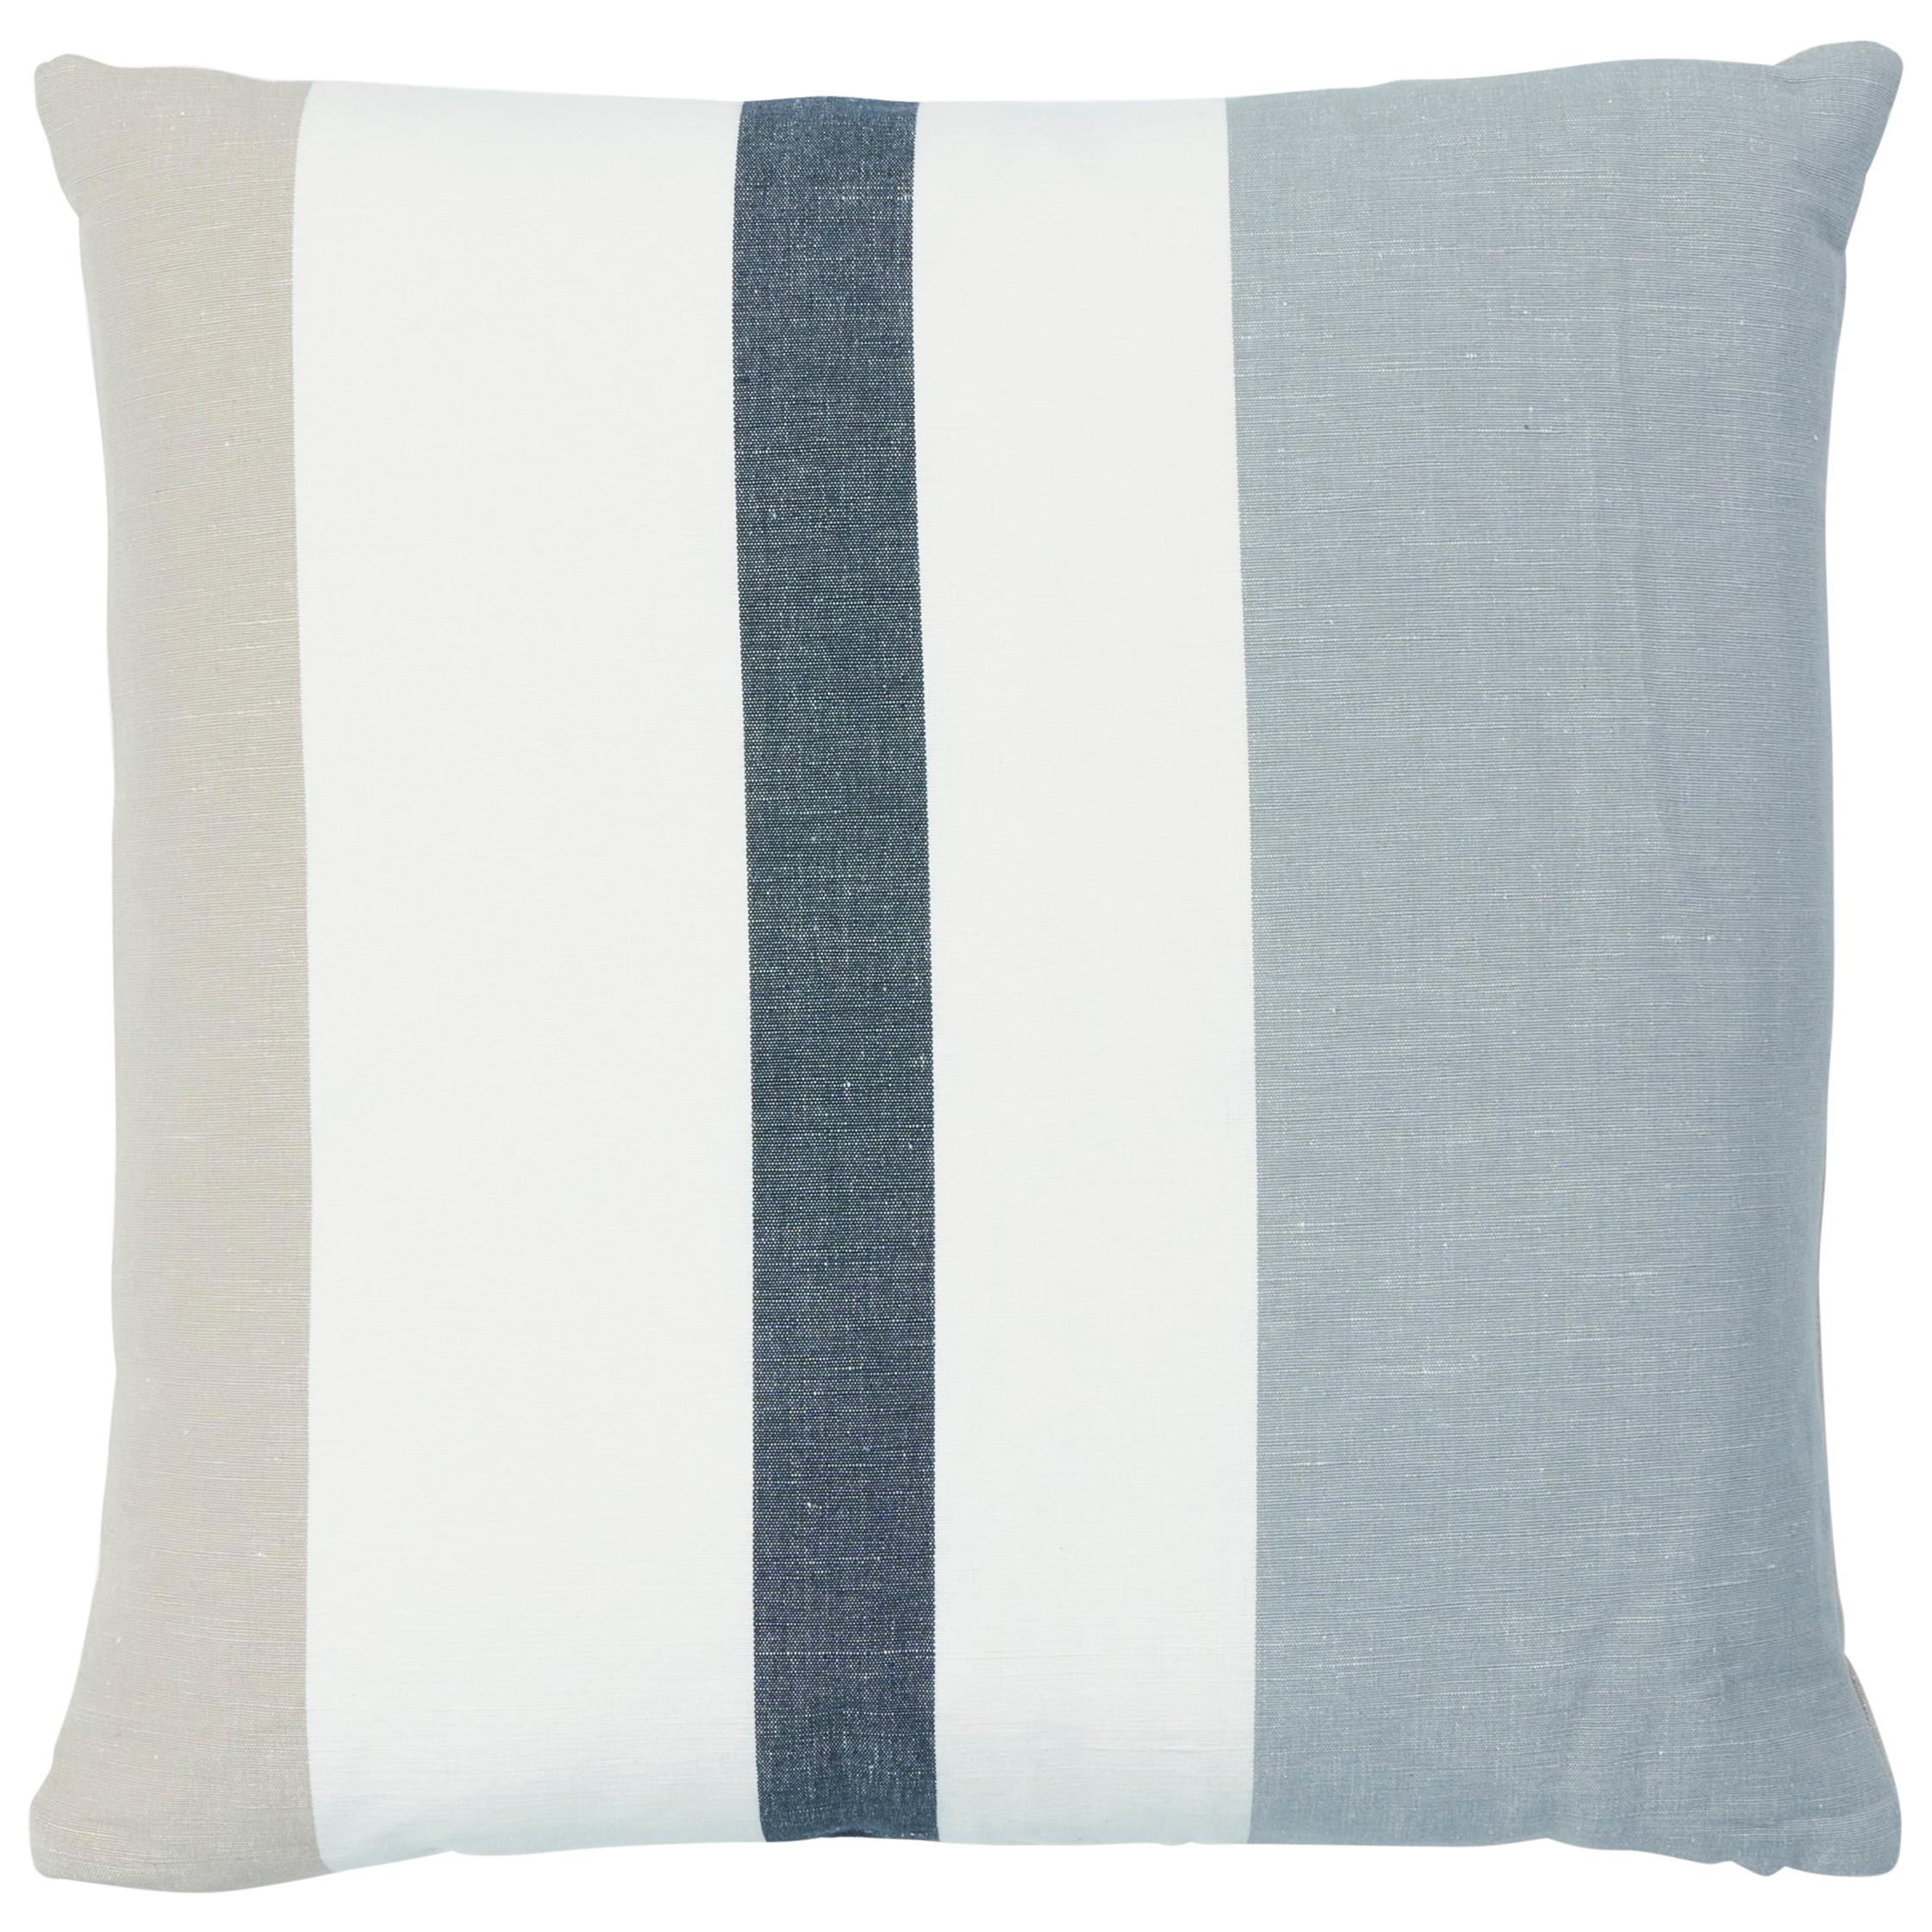 Schumacher Lolland Linen Stripe Pillow in Grey Sand